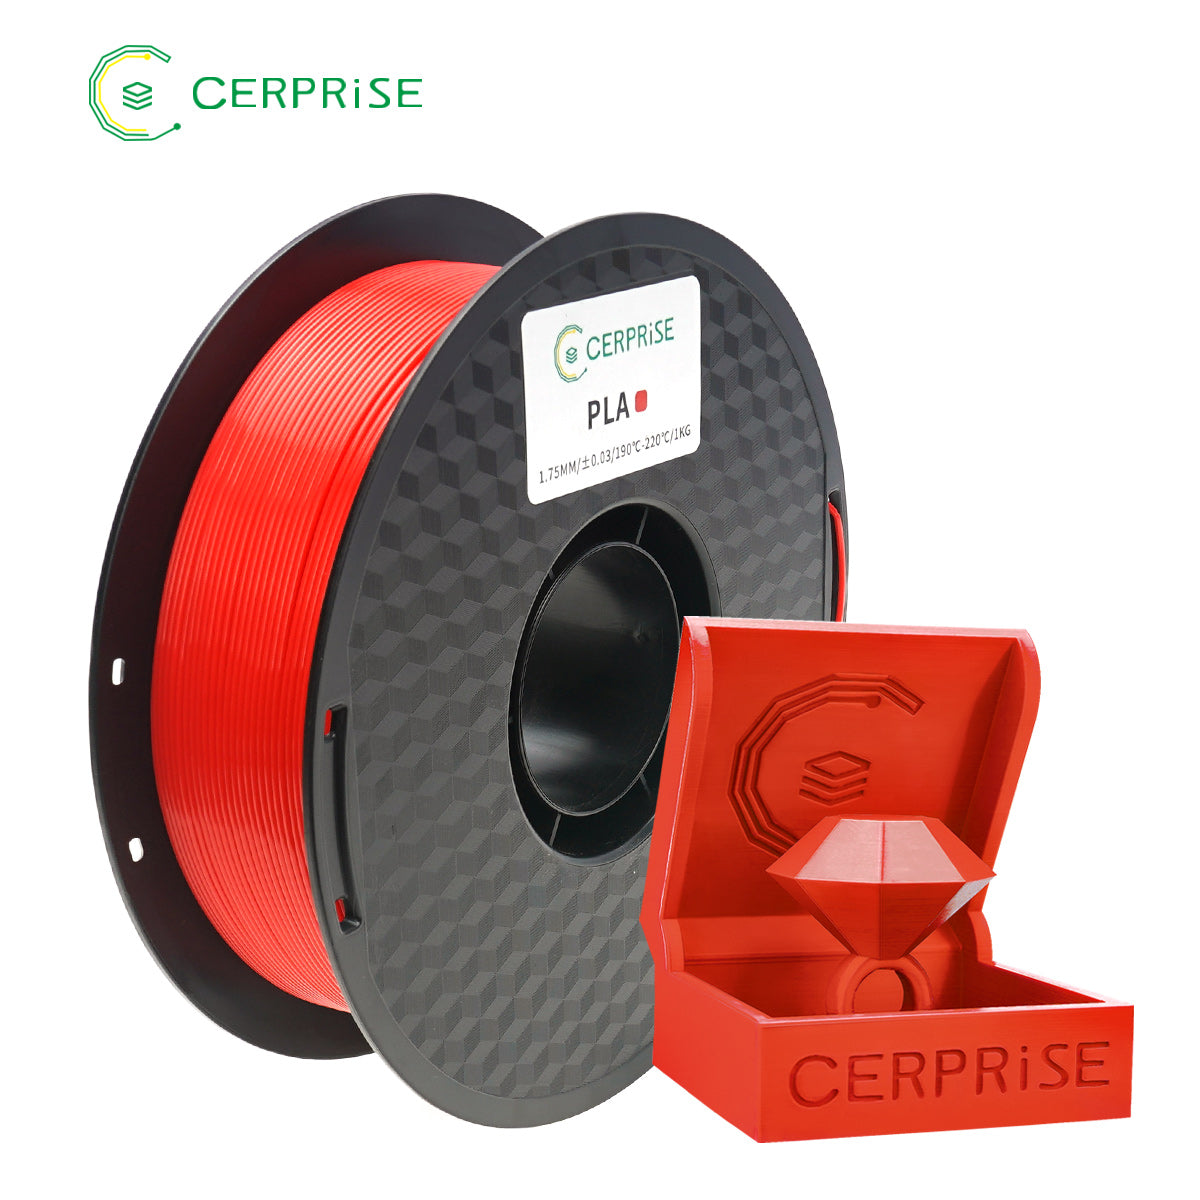 CERPRiSE Filament 1.75mm,1 kg (2.2lbs) Spool